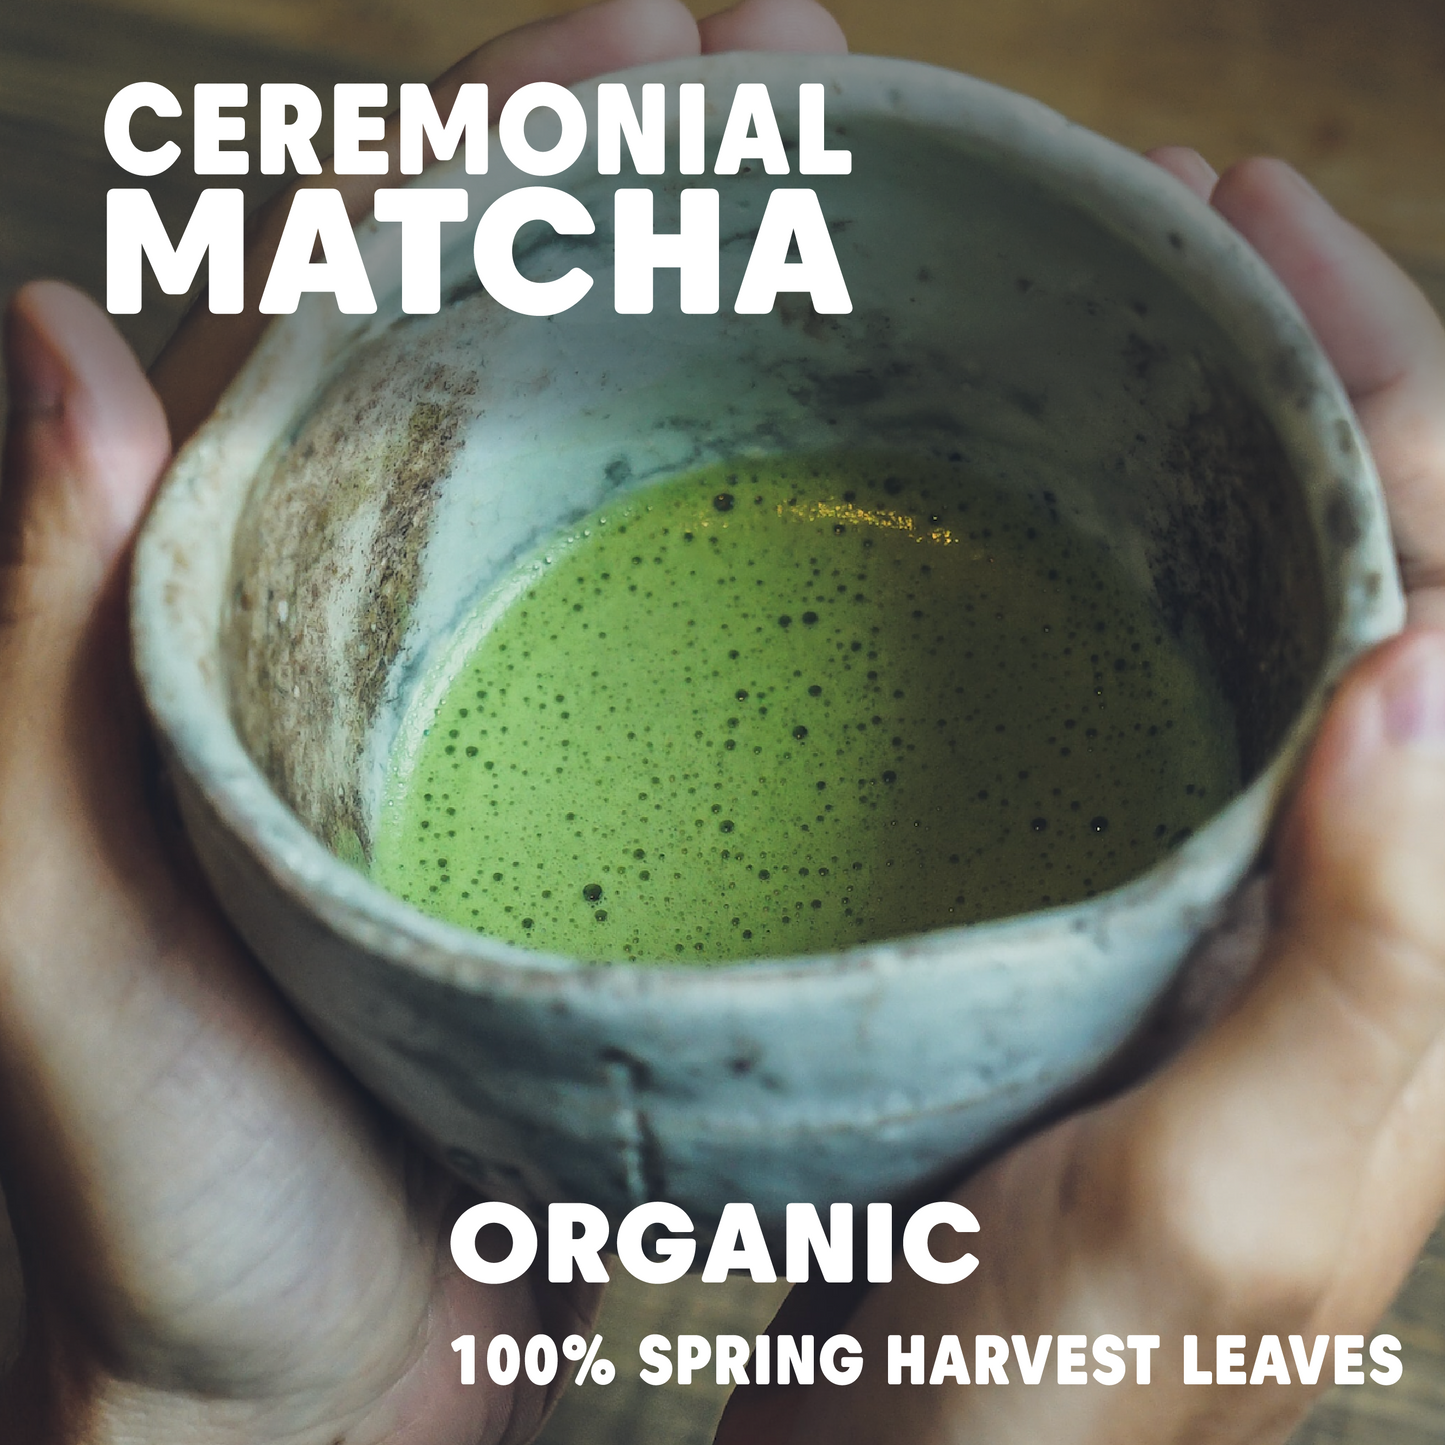 Matcha Green Tea Powder - Ceremonial Grade, Organic